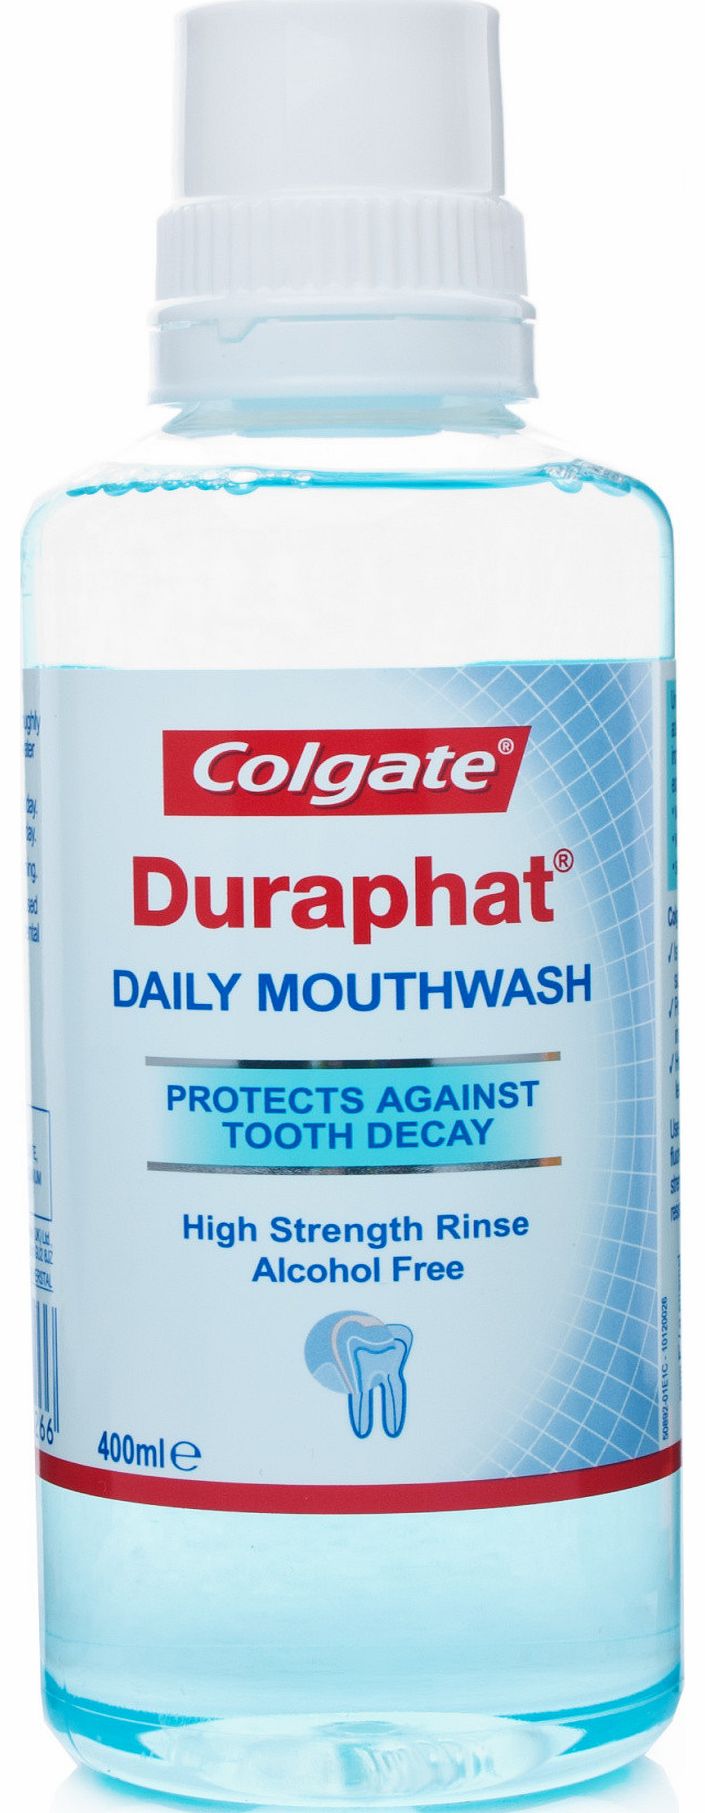 Duraphat Daily Mouthwash